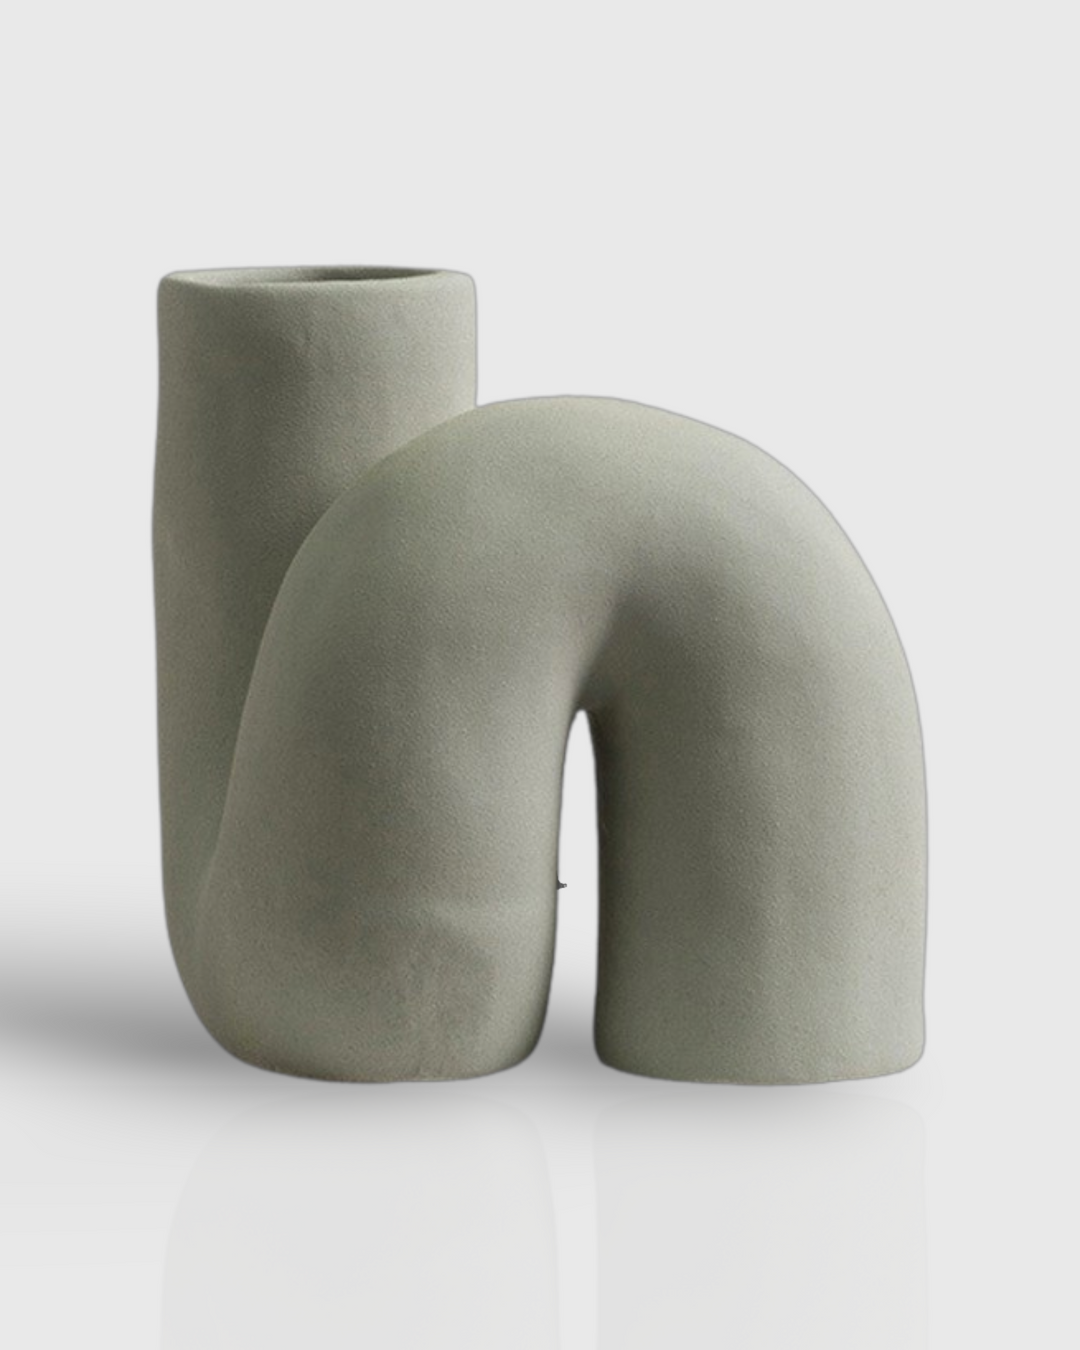 Designer-Vase IKI Vasen 10" aus Keramik boho cj decor deko & homestyle Facebook fashion keramik max nordic priori vase